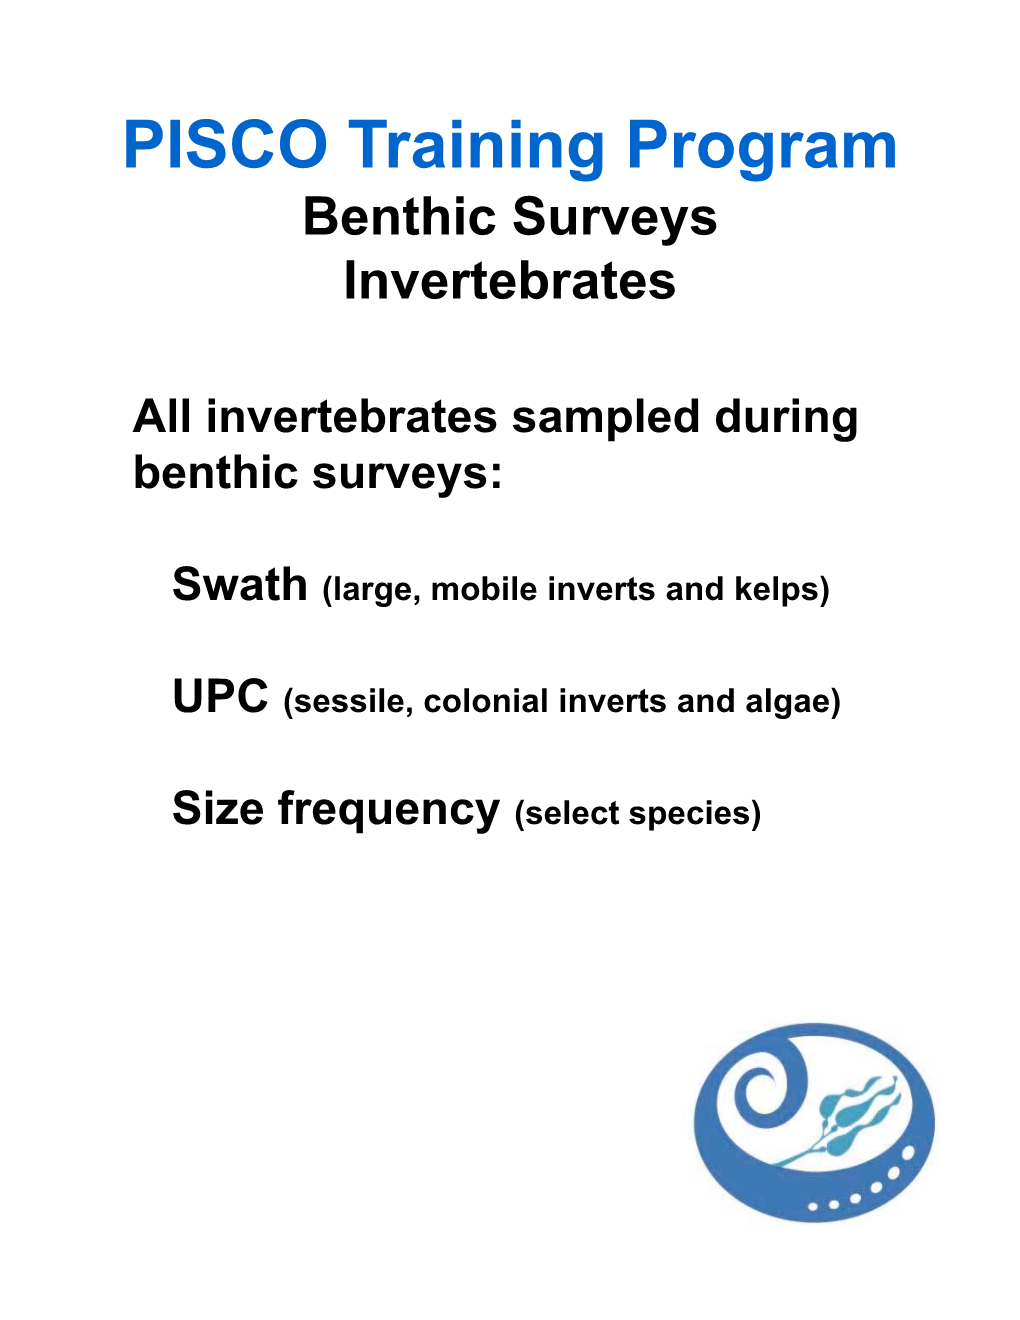 PISCO Training Program Benthic Surveys Invertebrates